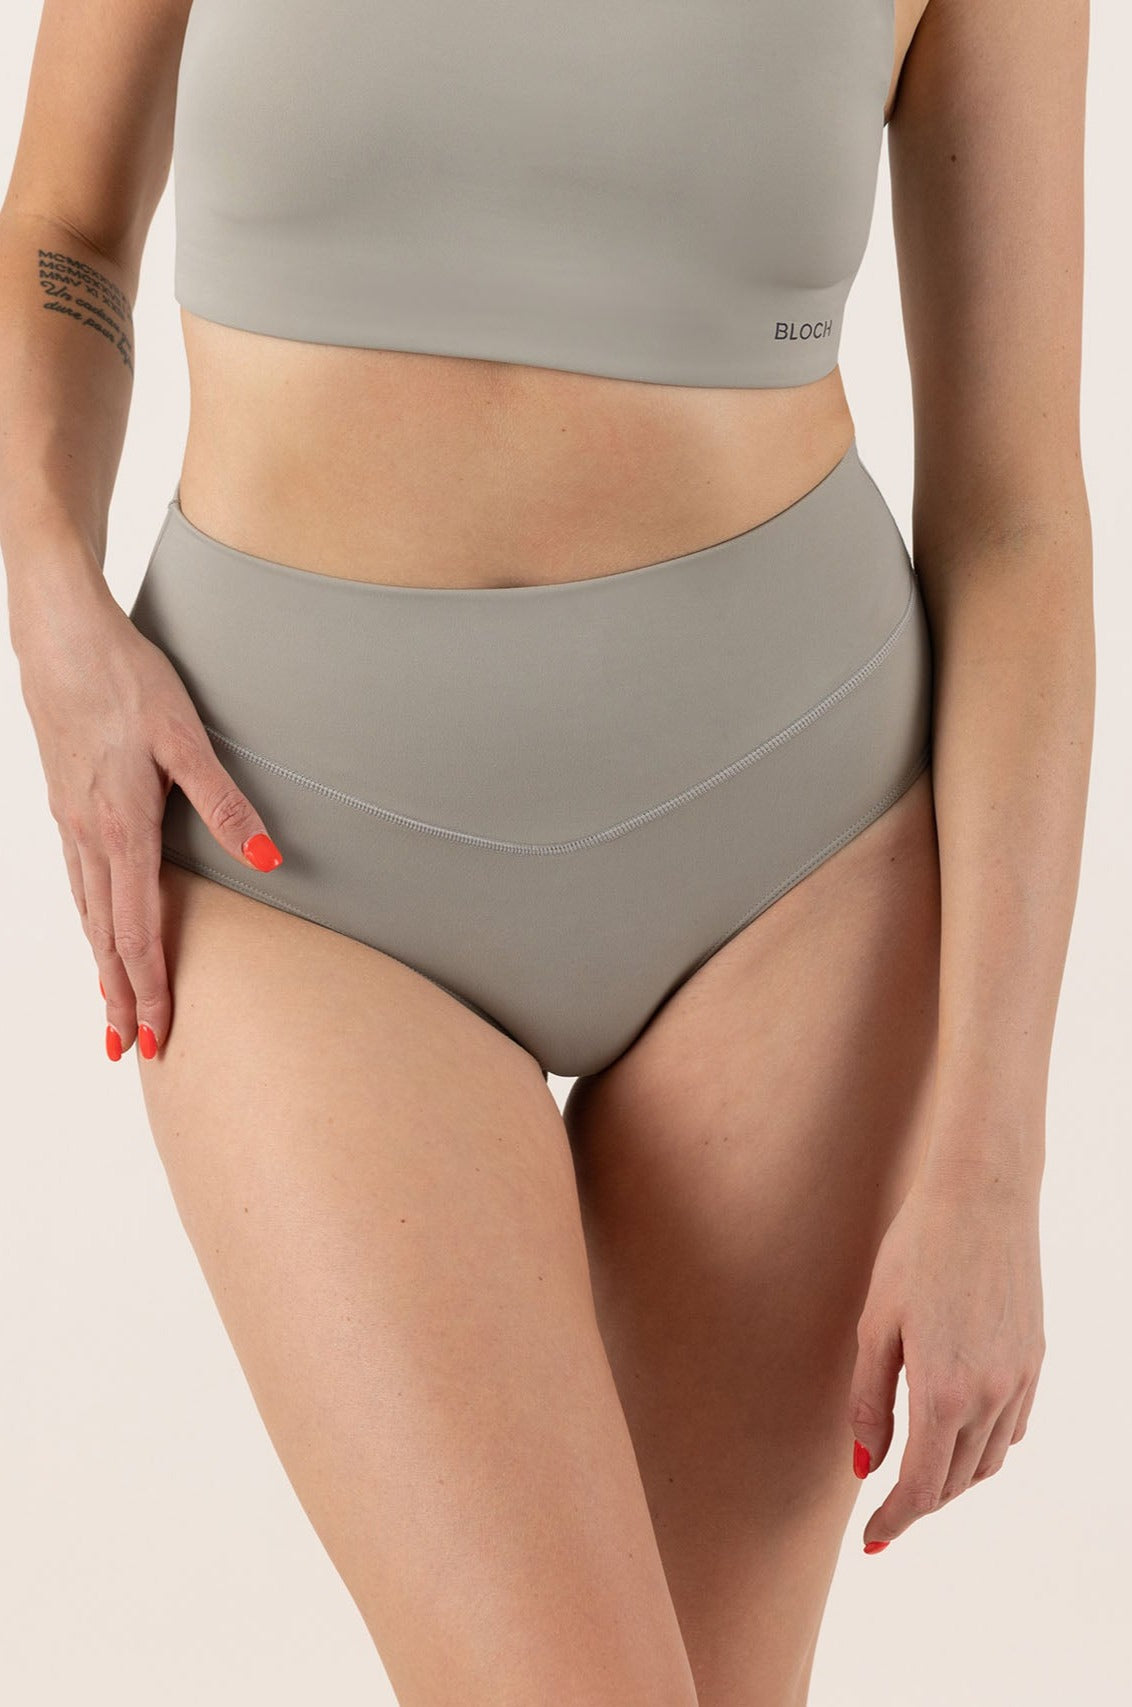 GETOUT Seamless Underwear Women'S Sports Knickers Nylon Panties